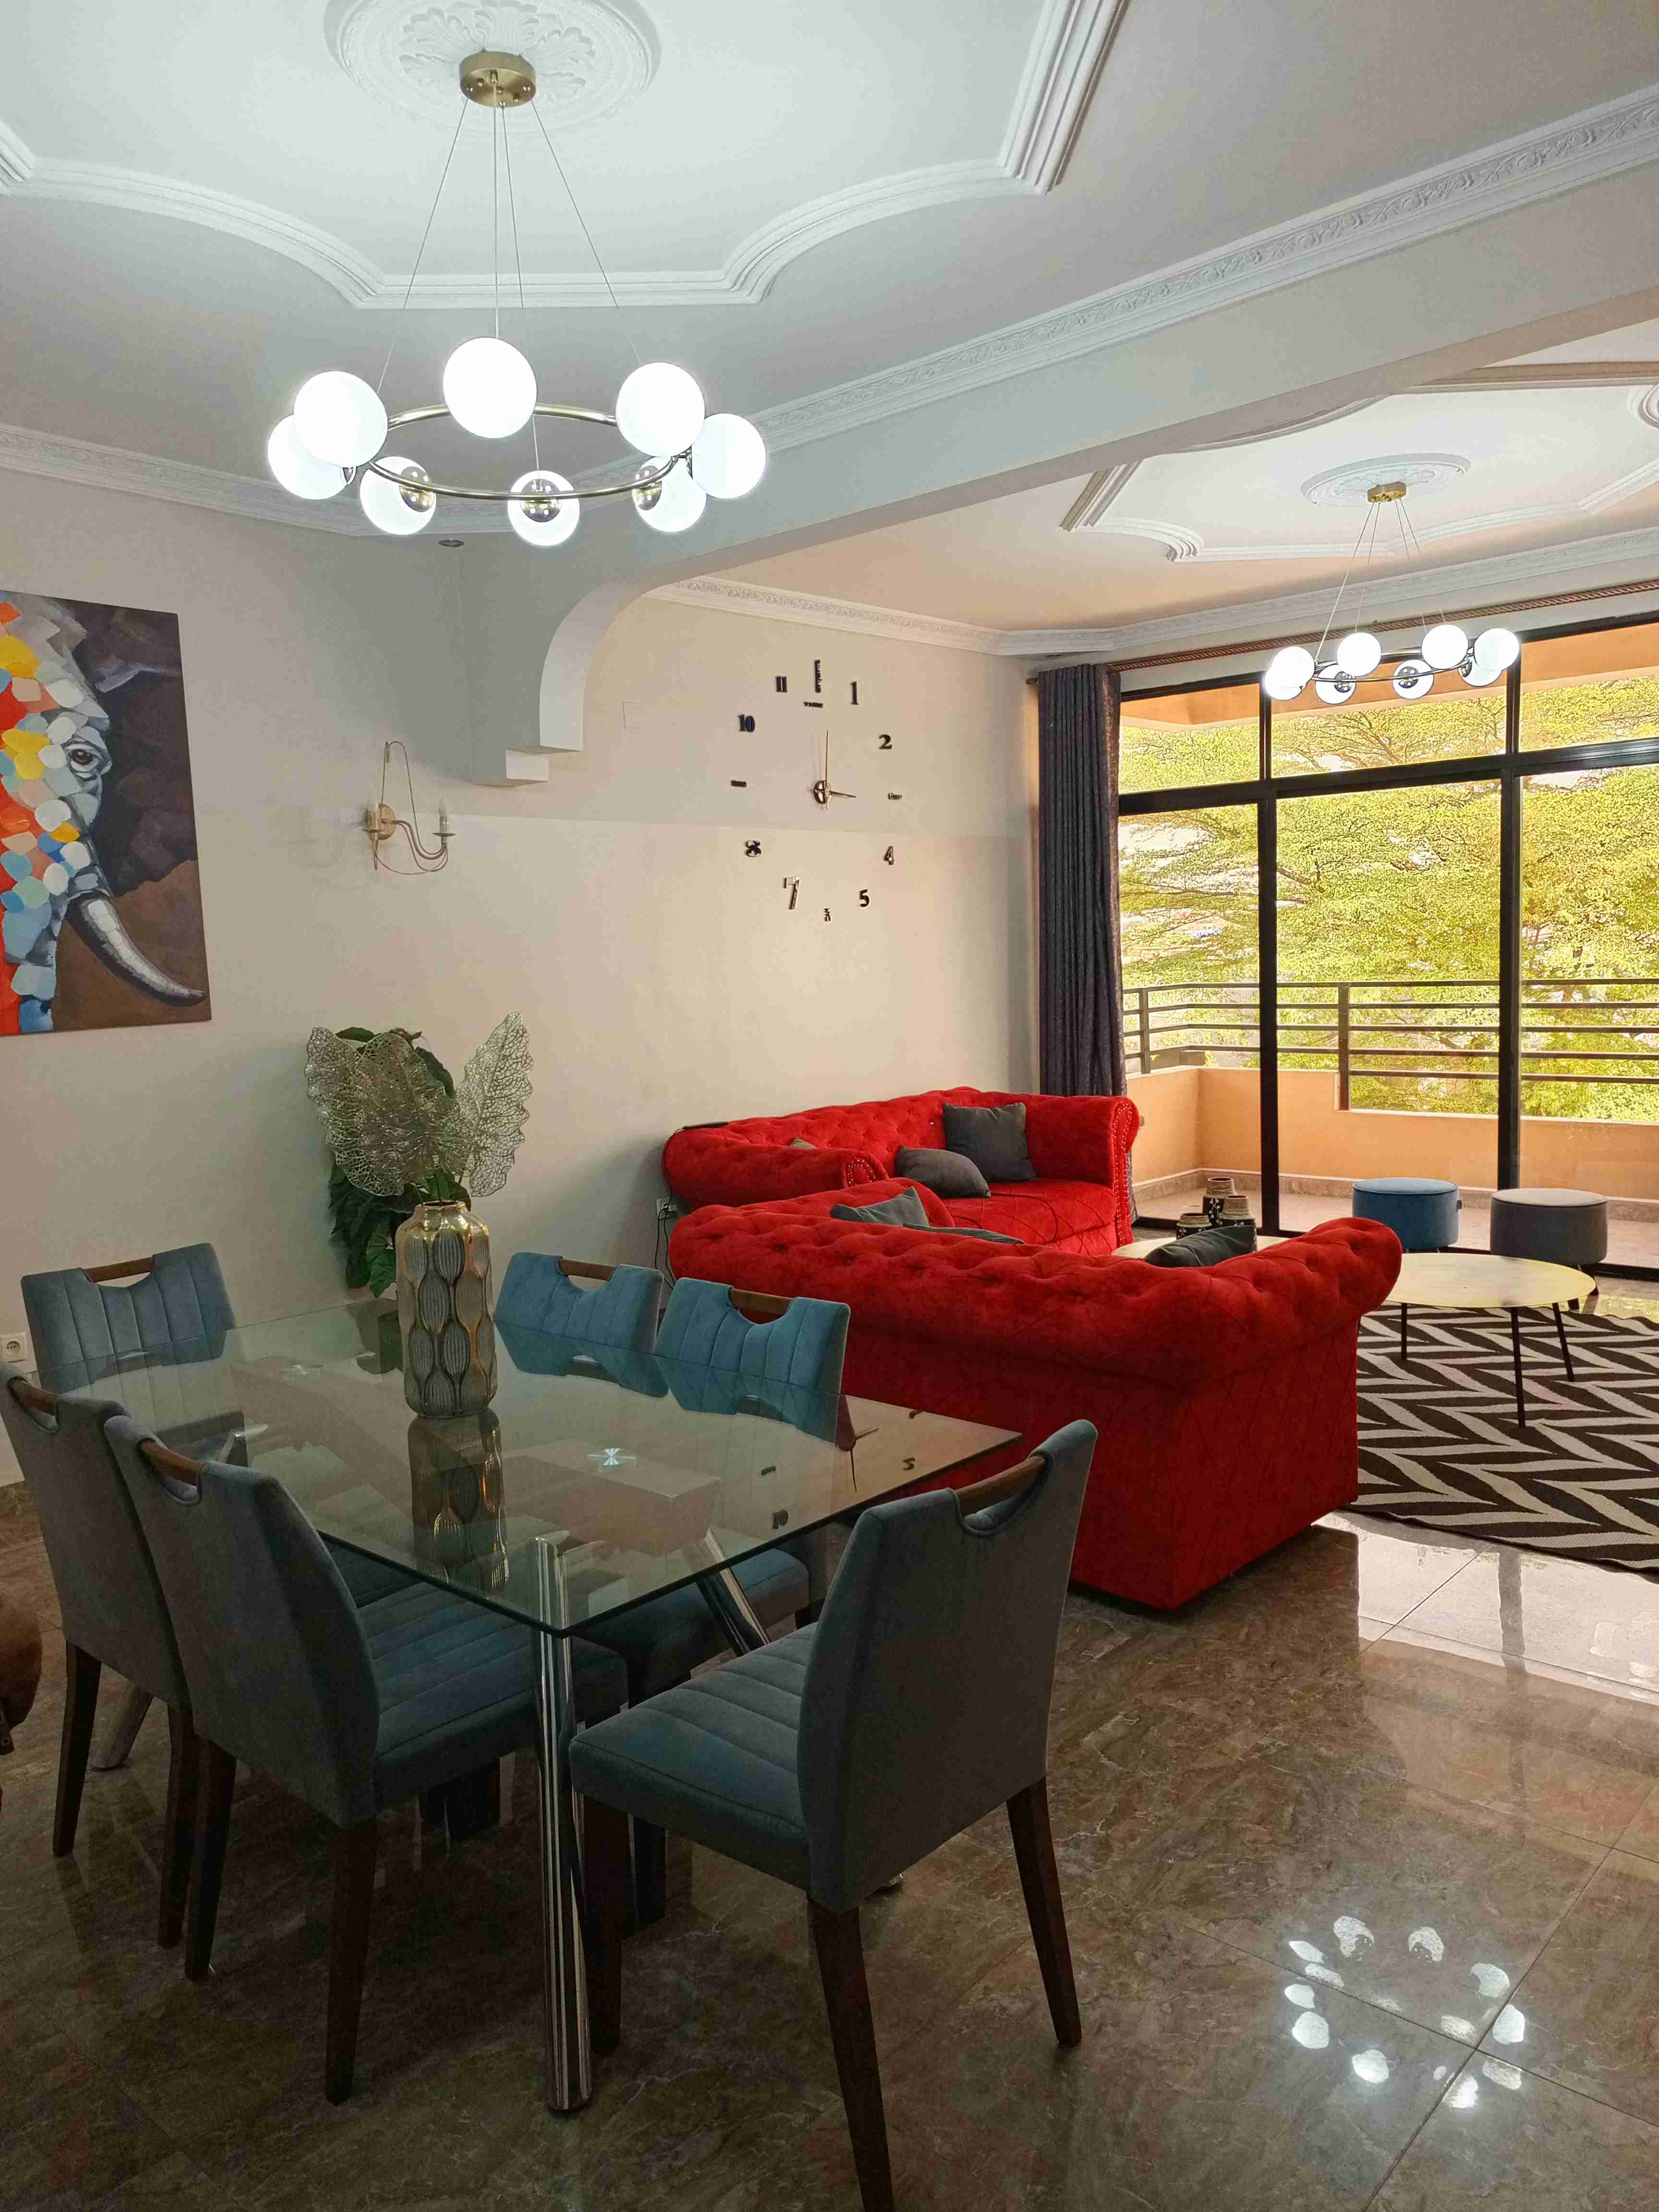 For rent Furnished Apartment - Neighborhood GB Kinshasa Ngaliema